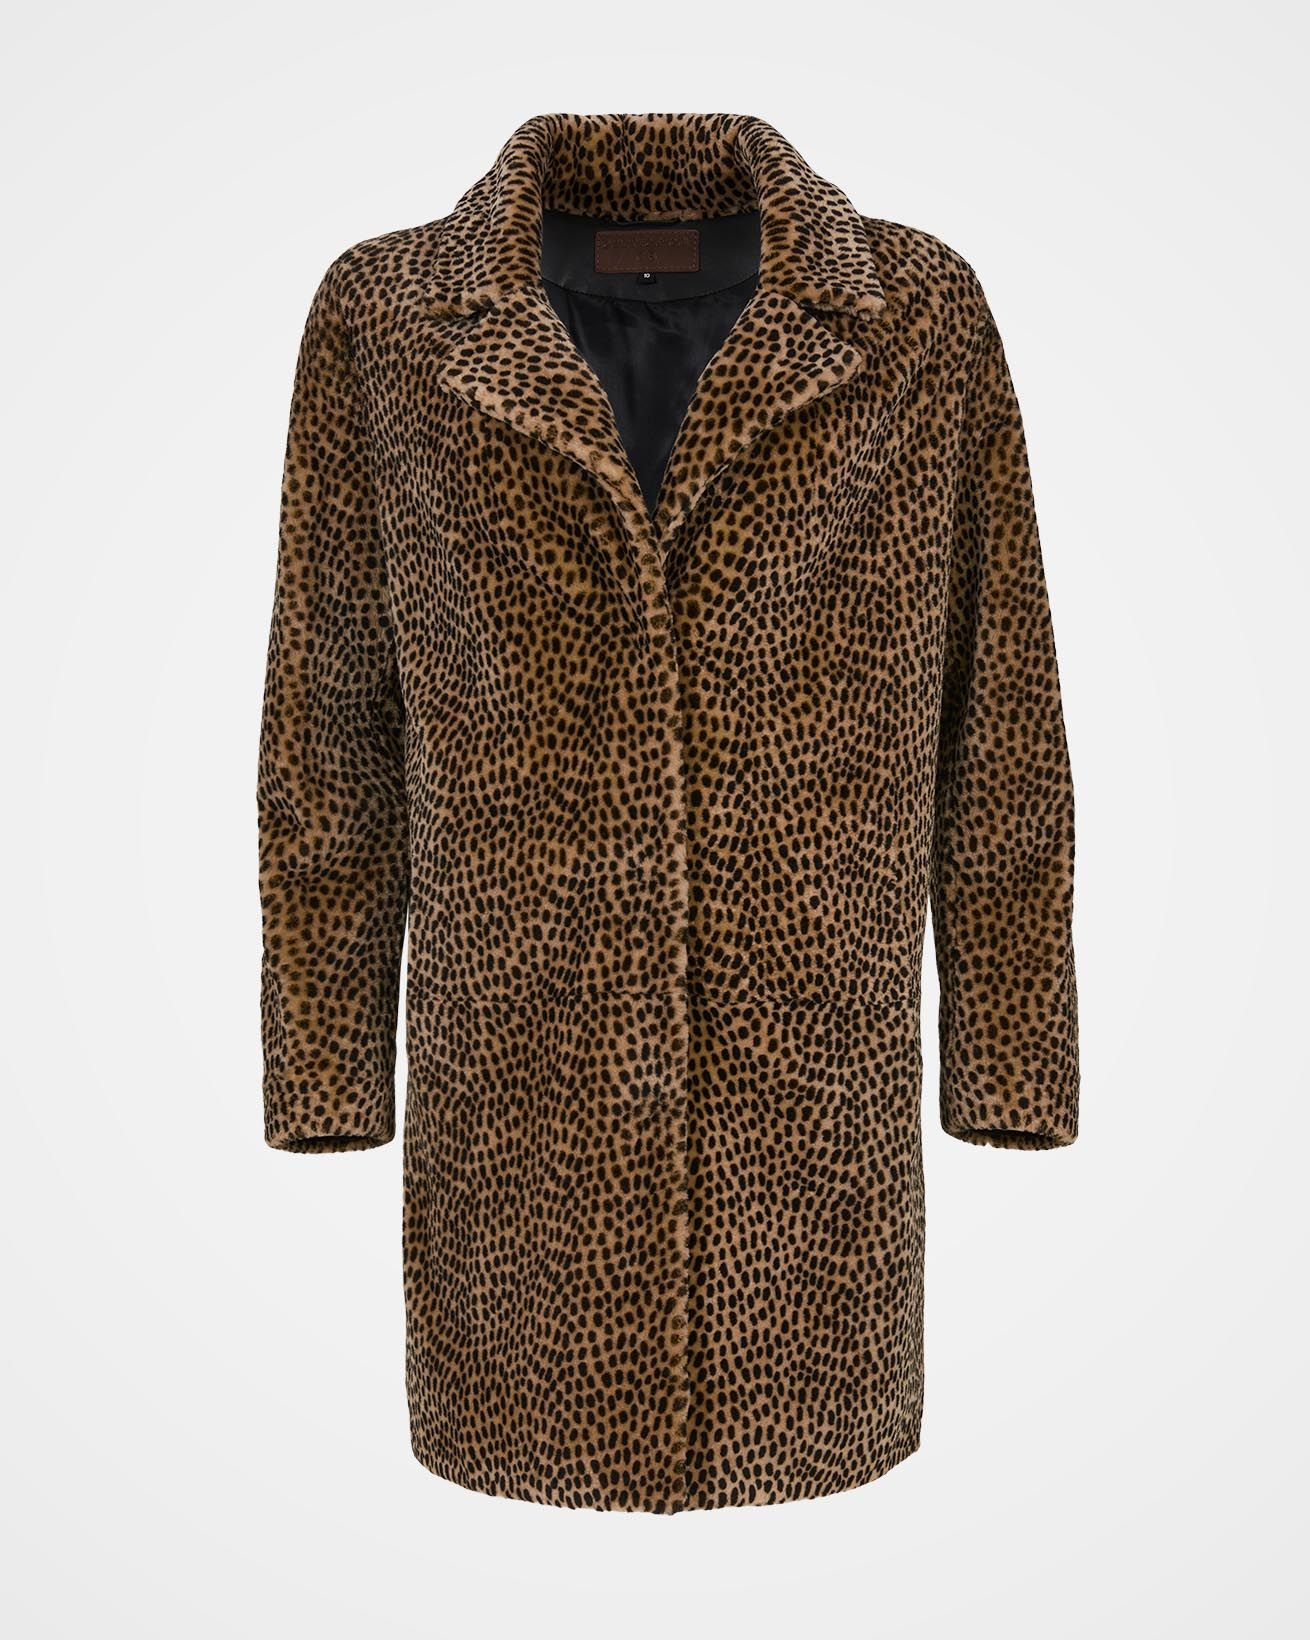 Cheetah Print Sheepskin Coat / Cheetah / 18